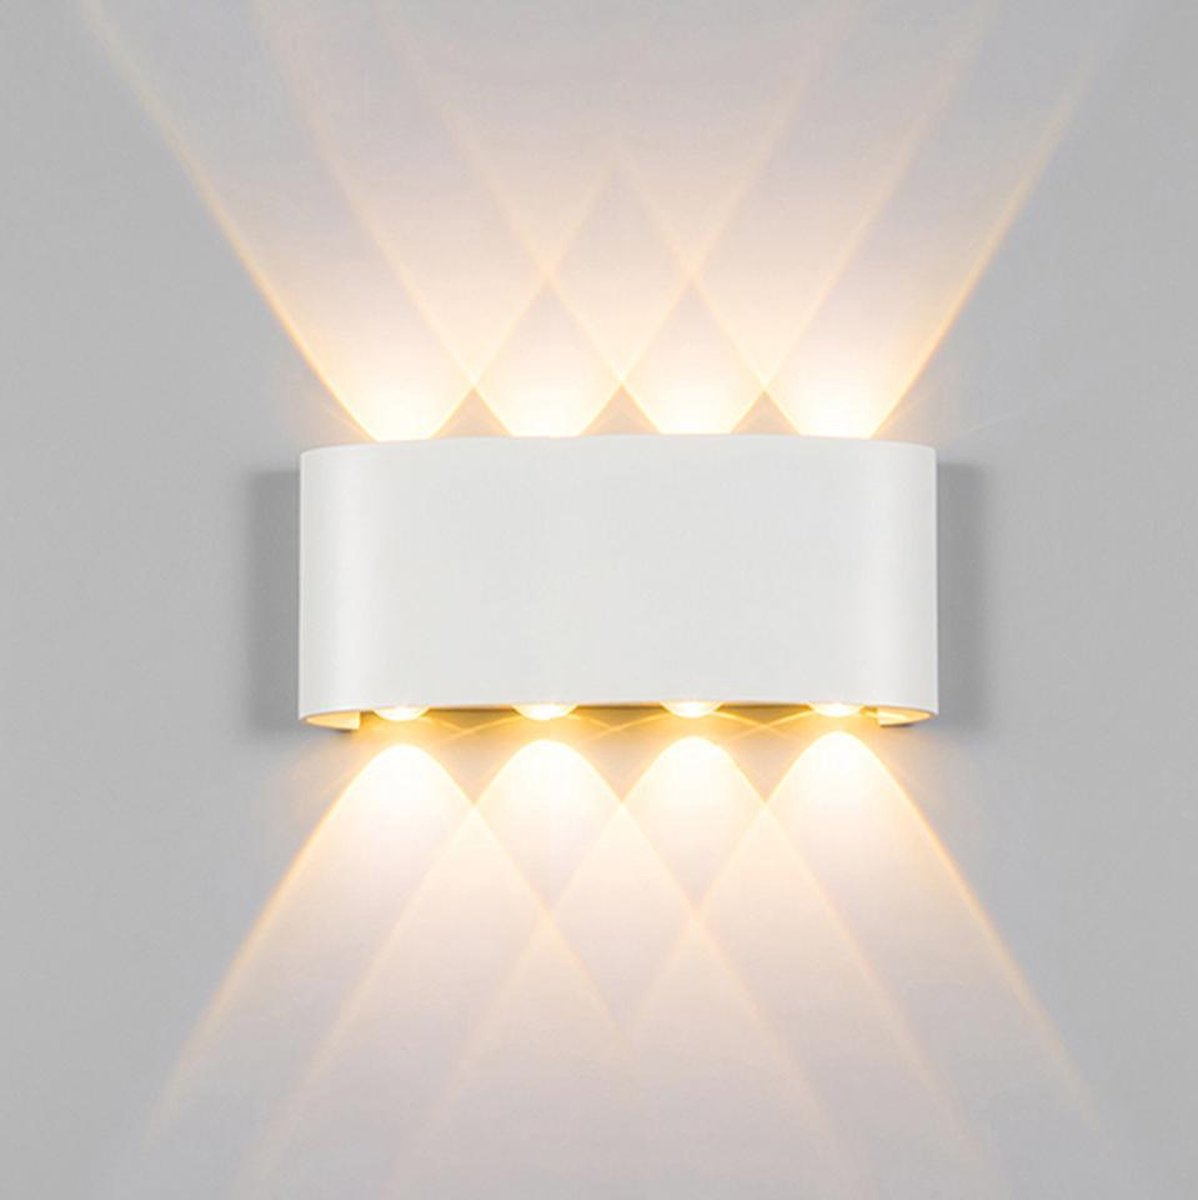 Smart Quality - led wandlamp binnen en buiten ip65 - Mat wit -Waterdicht - Badkamerverlichting - Spiegelverlichting - Tuin verlichting -